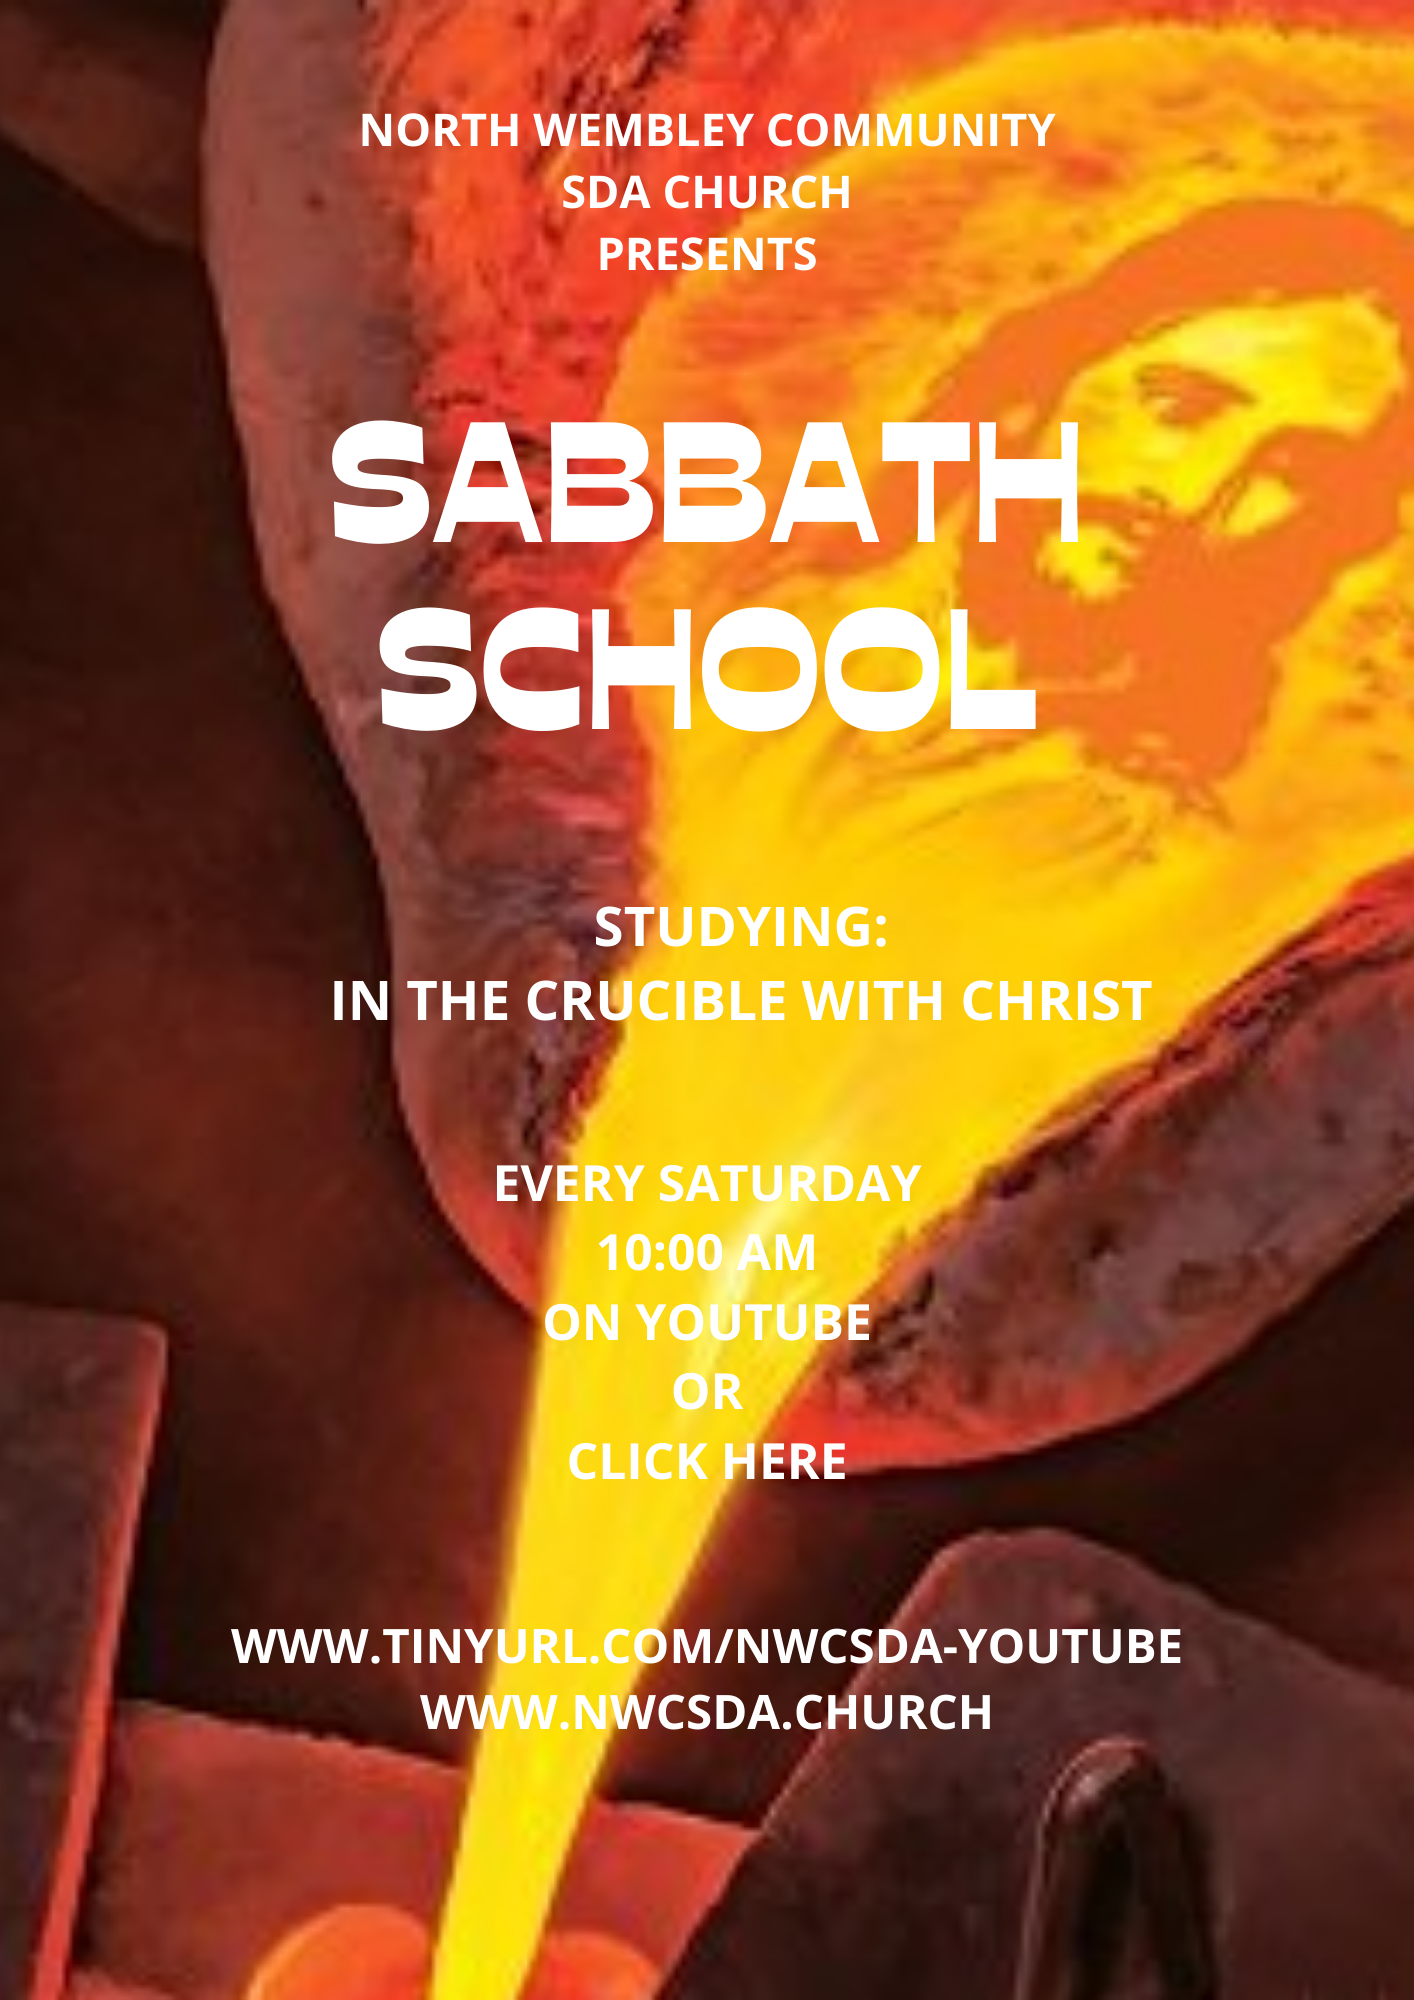 Sabbath School - Every Saturday at 10:00 (Not online)